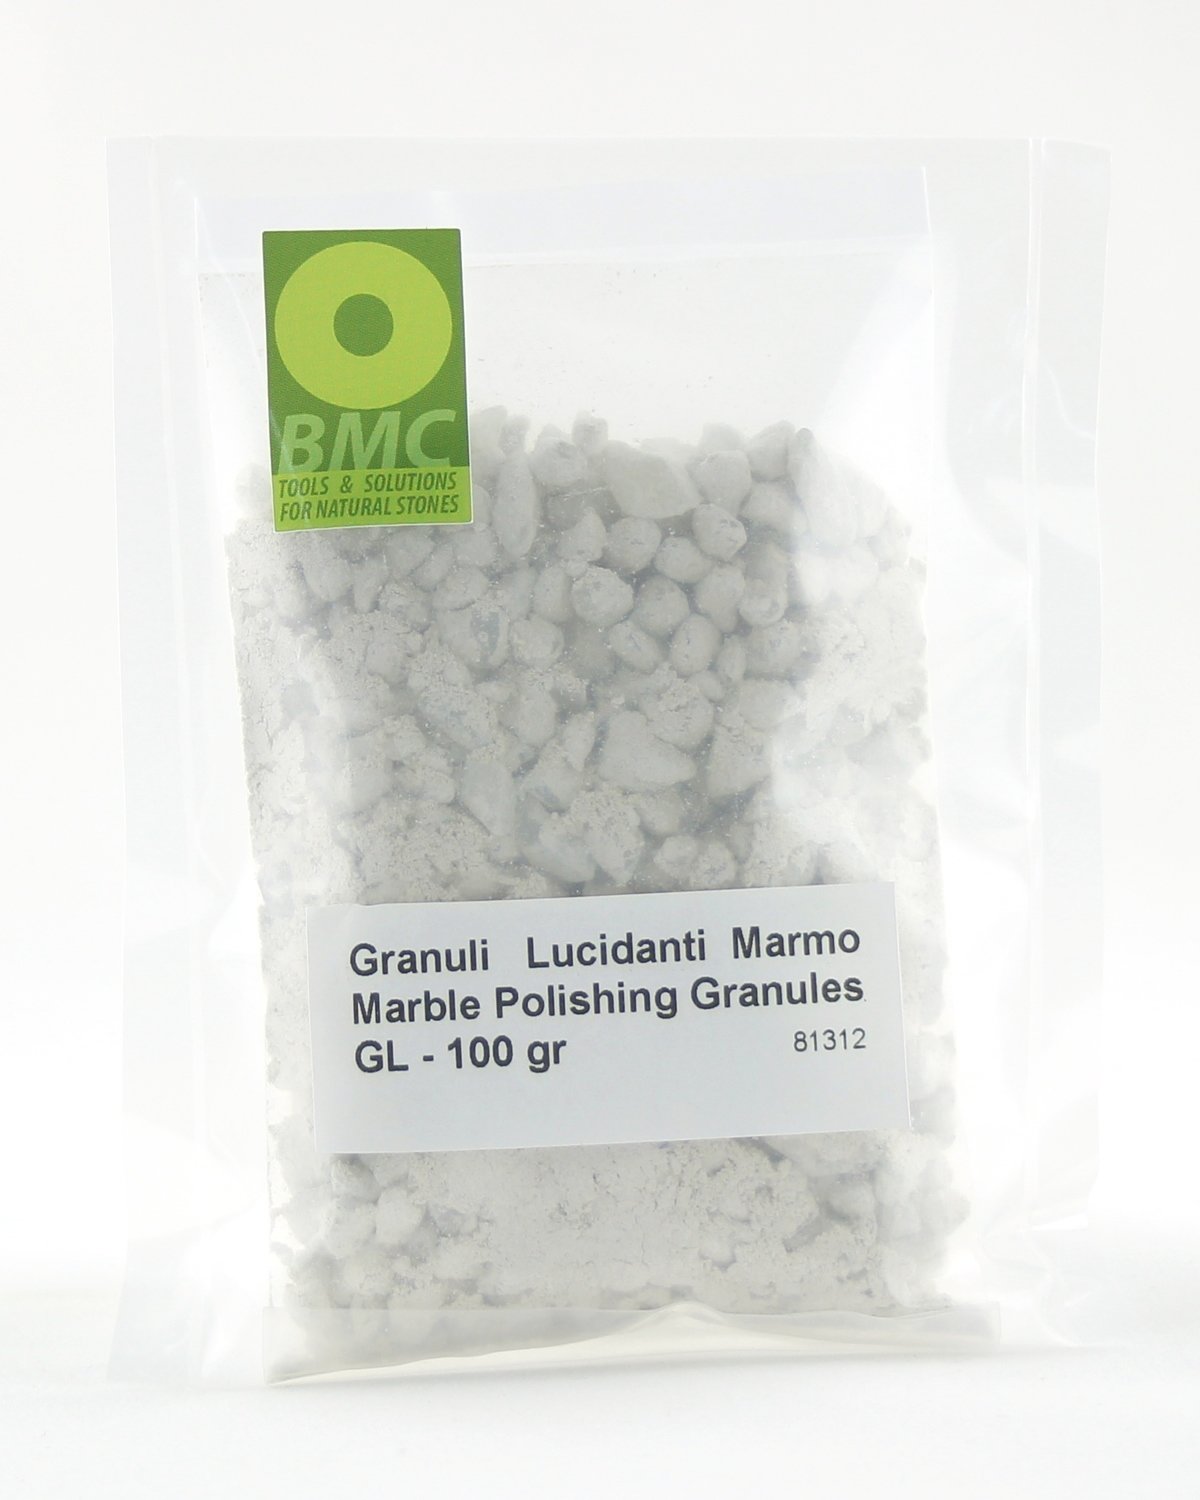 Marble polishing granules GL100